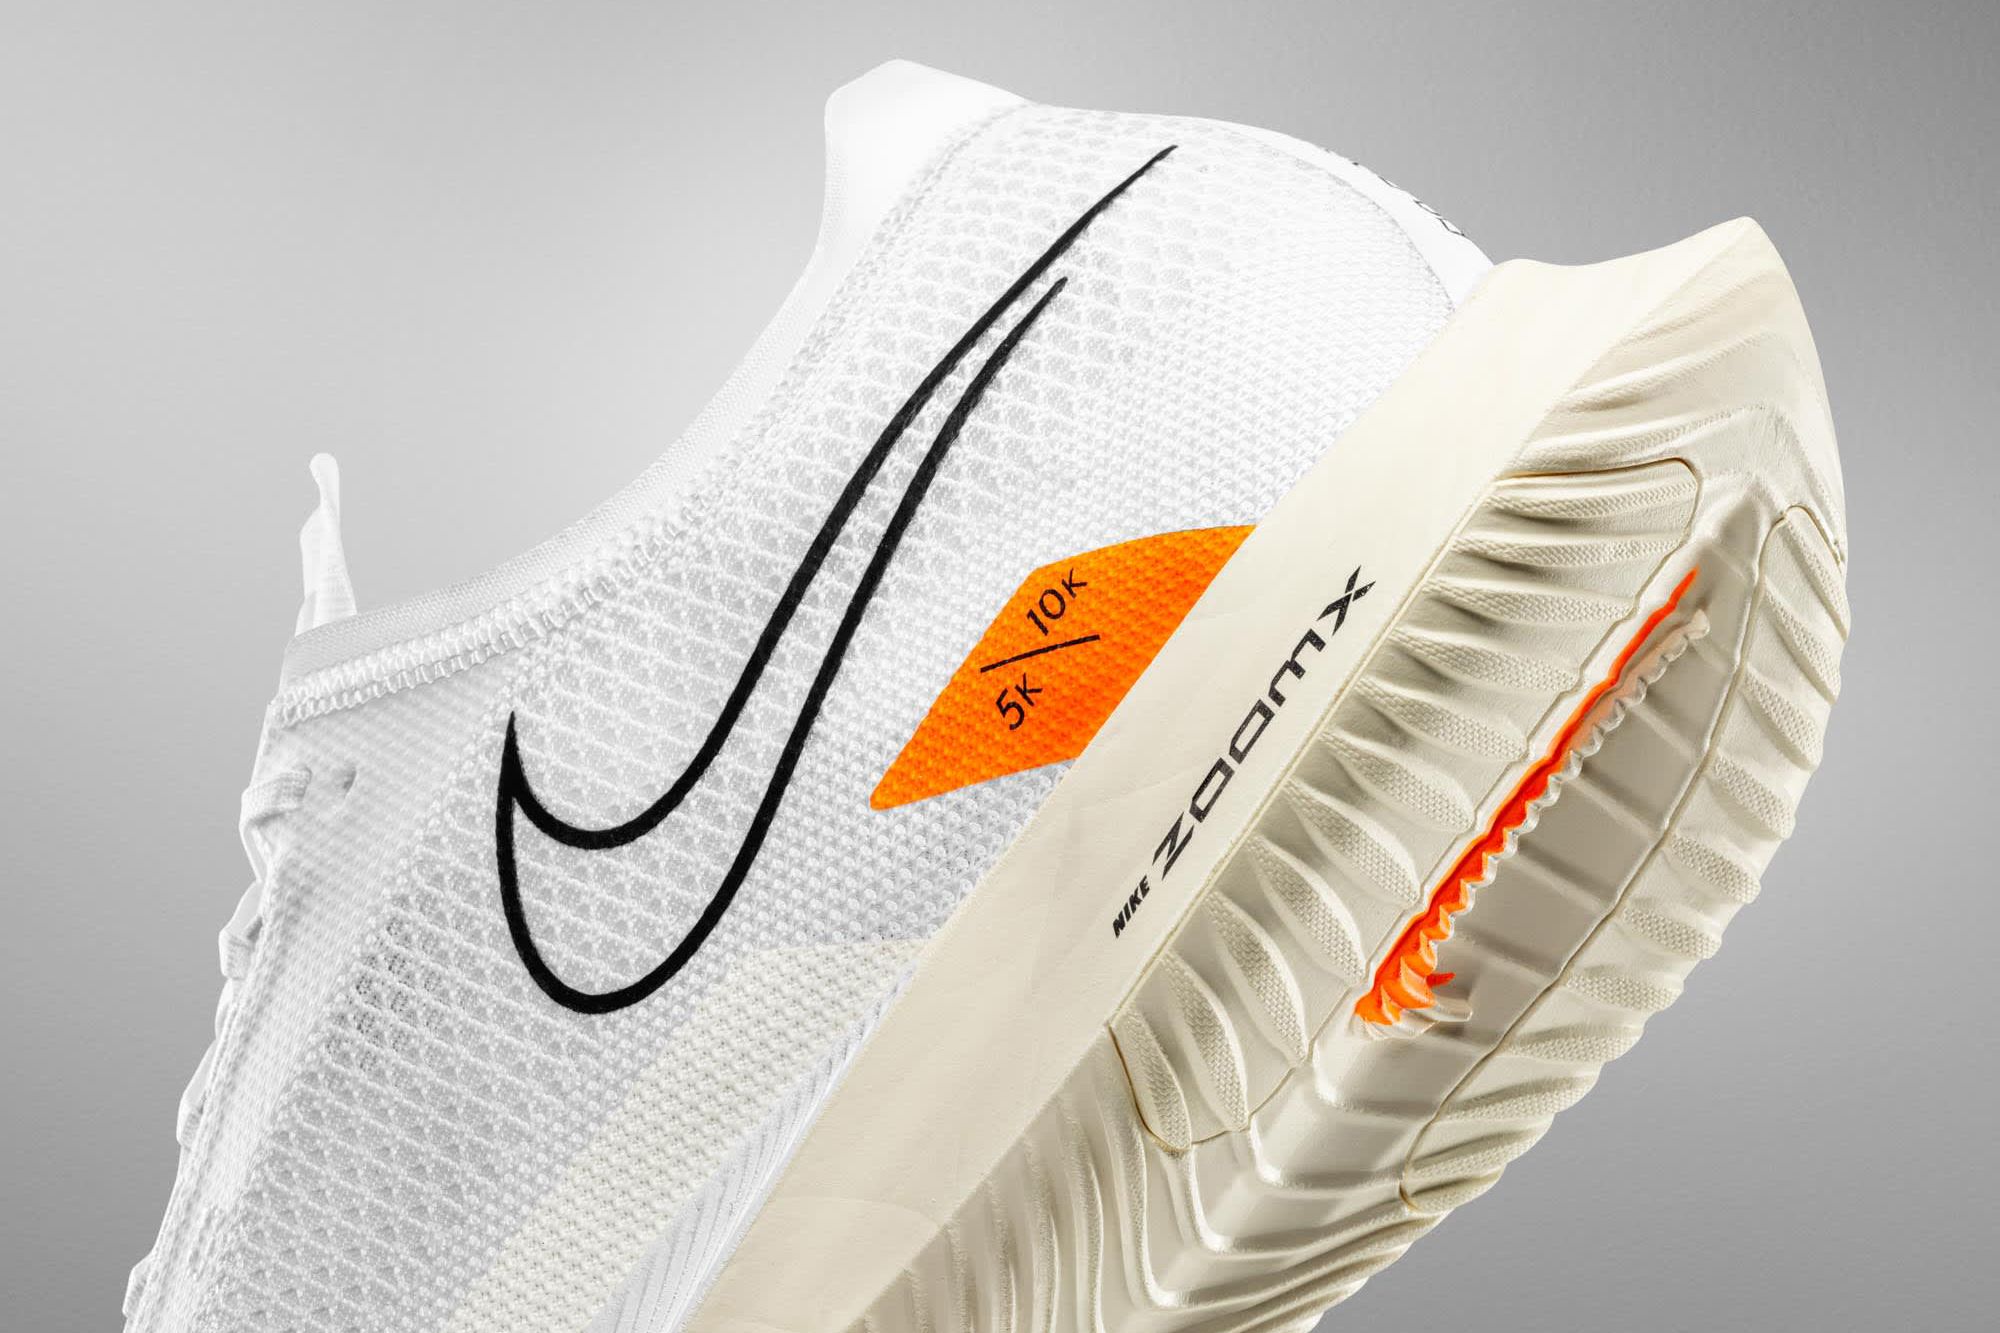 Nike ZoomX StreakFly Running Shoe